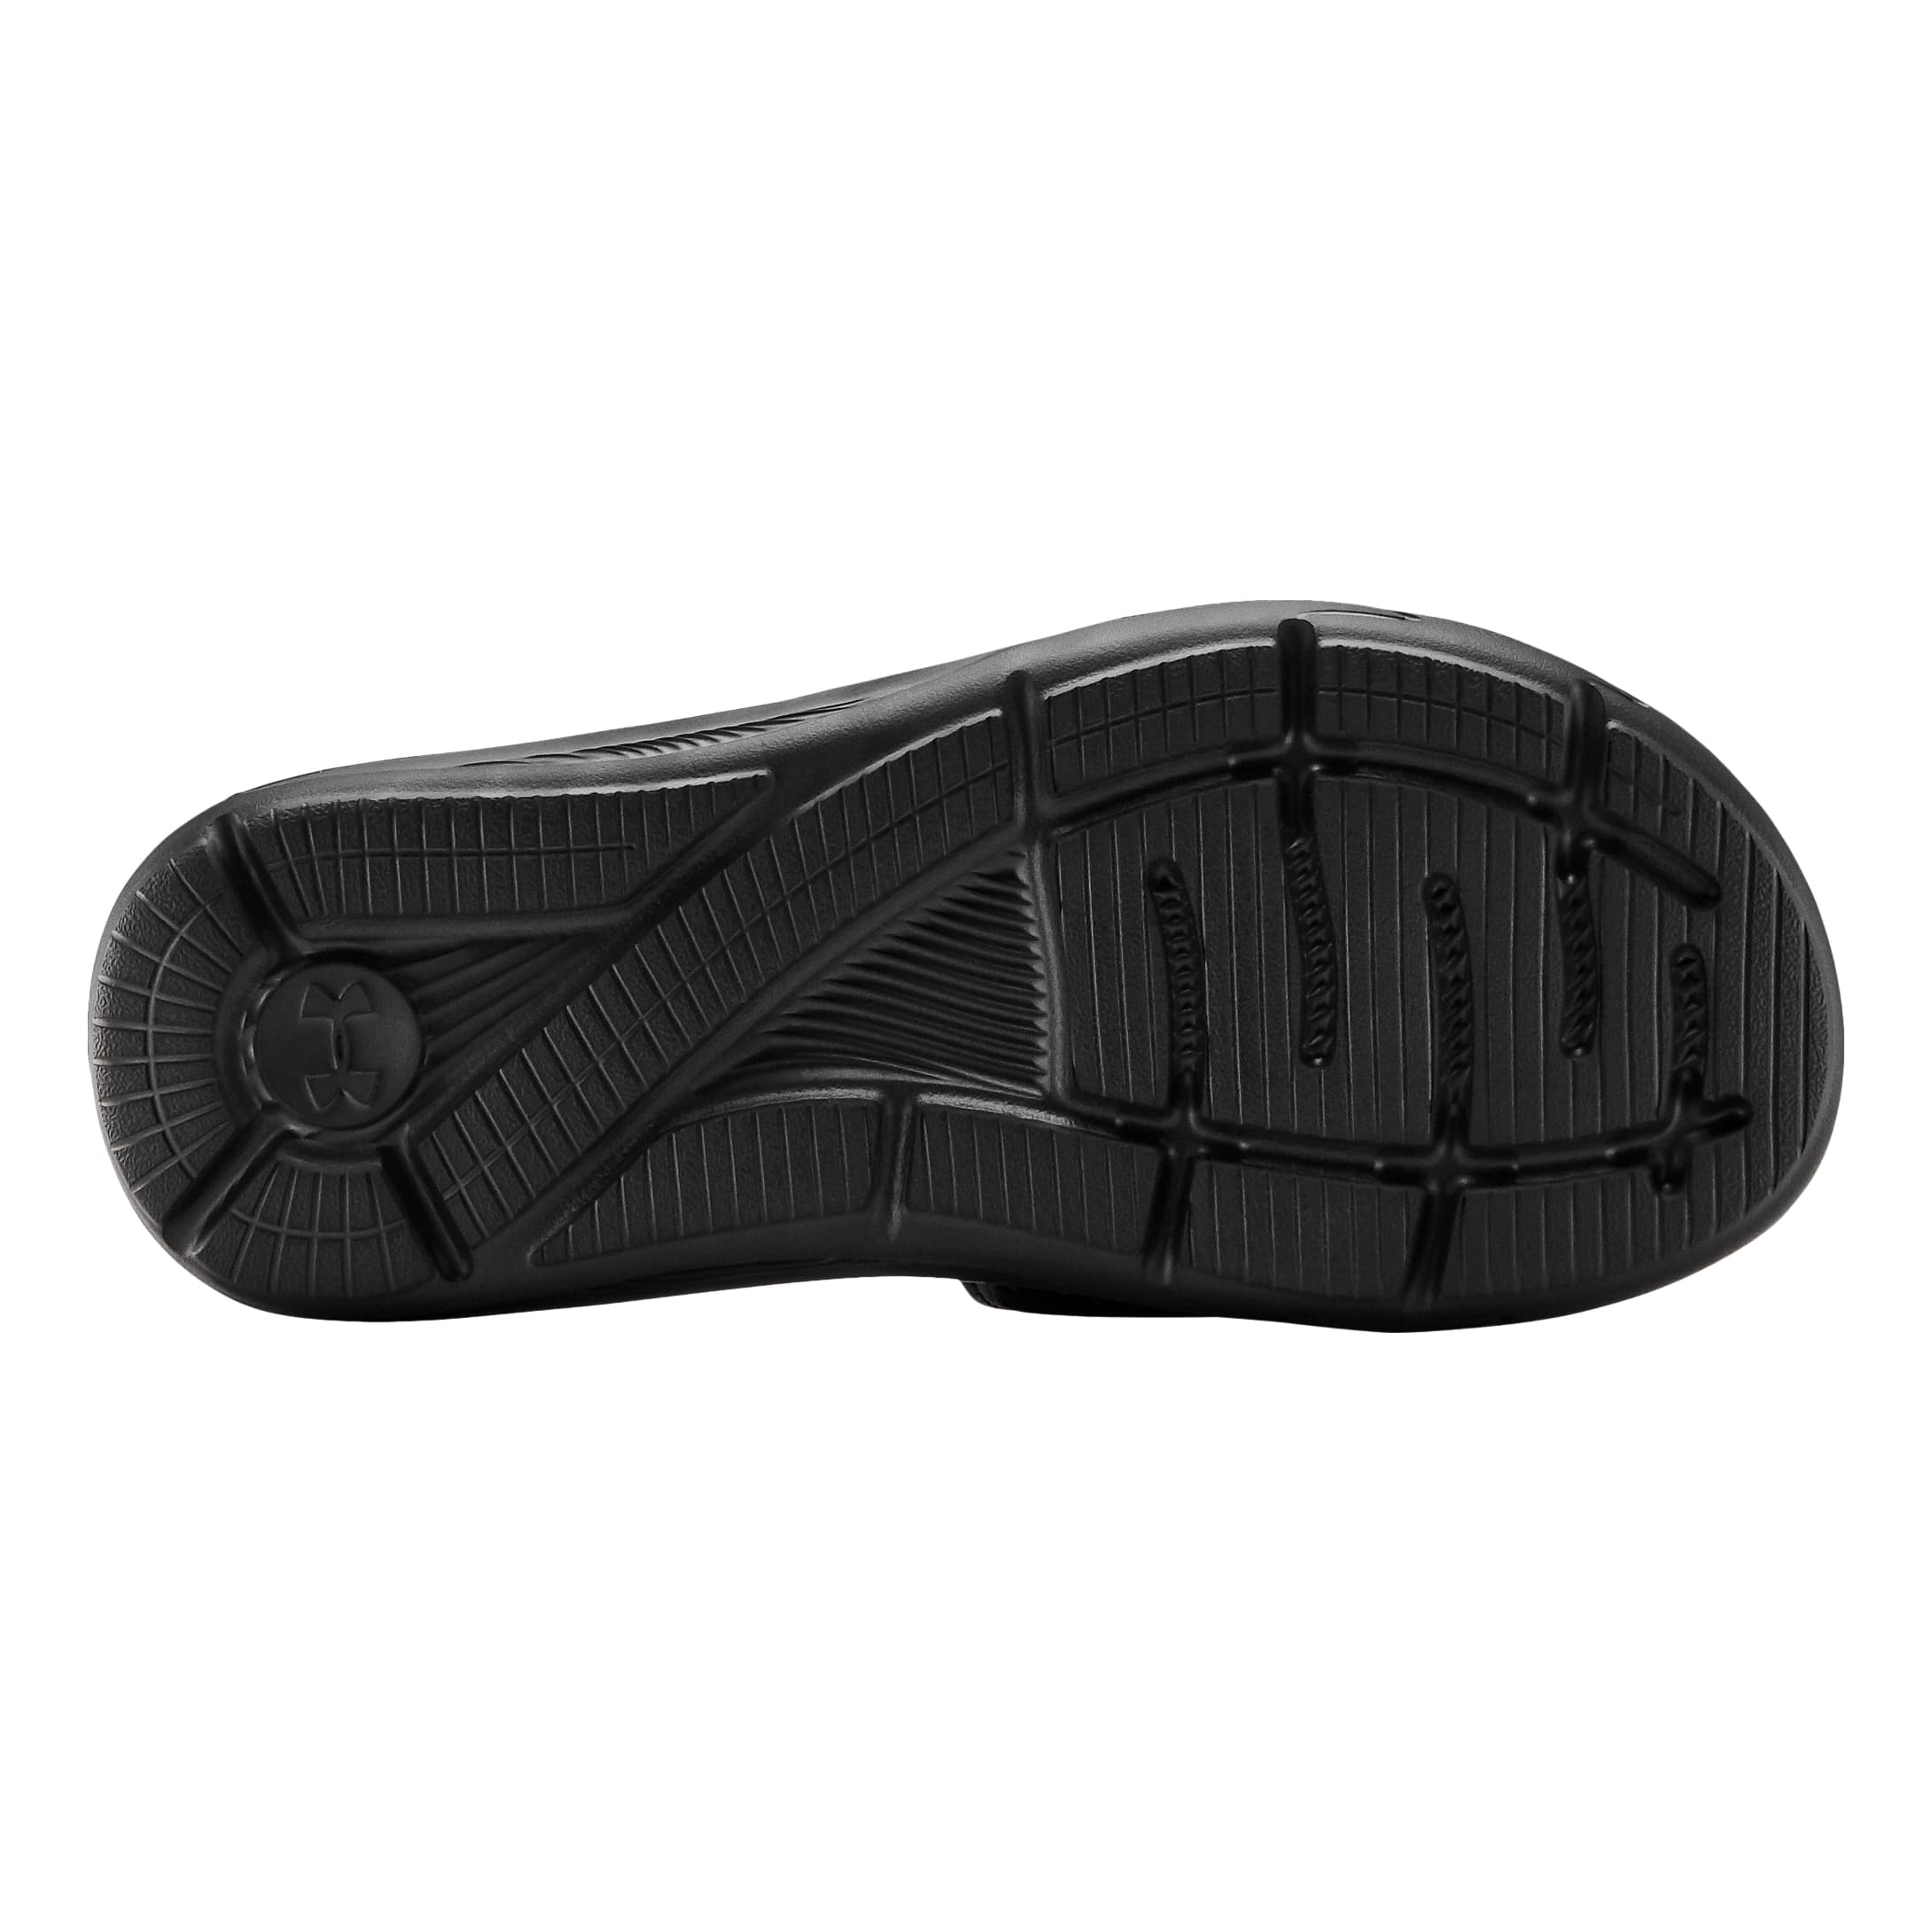 Under Armour® Children’s Ignite VI Slide Sandals - sole